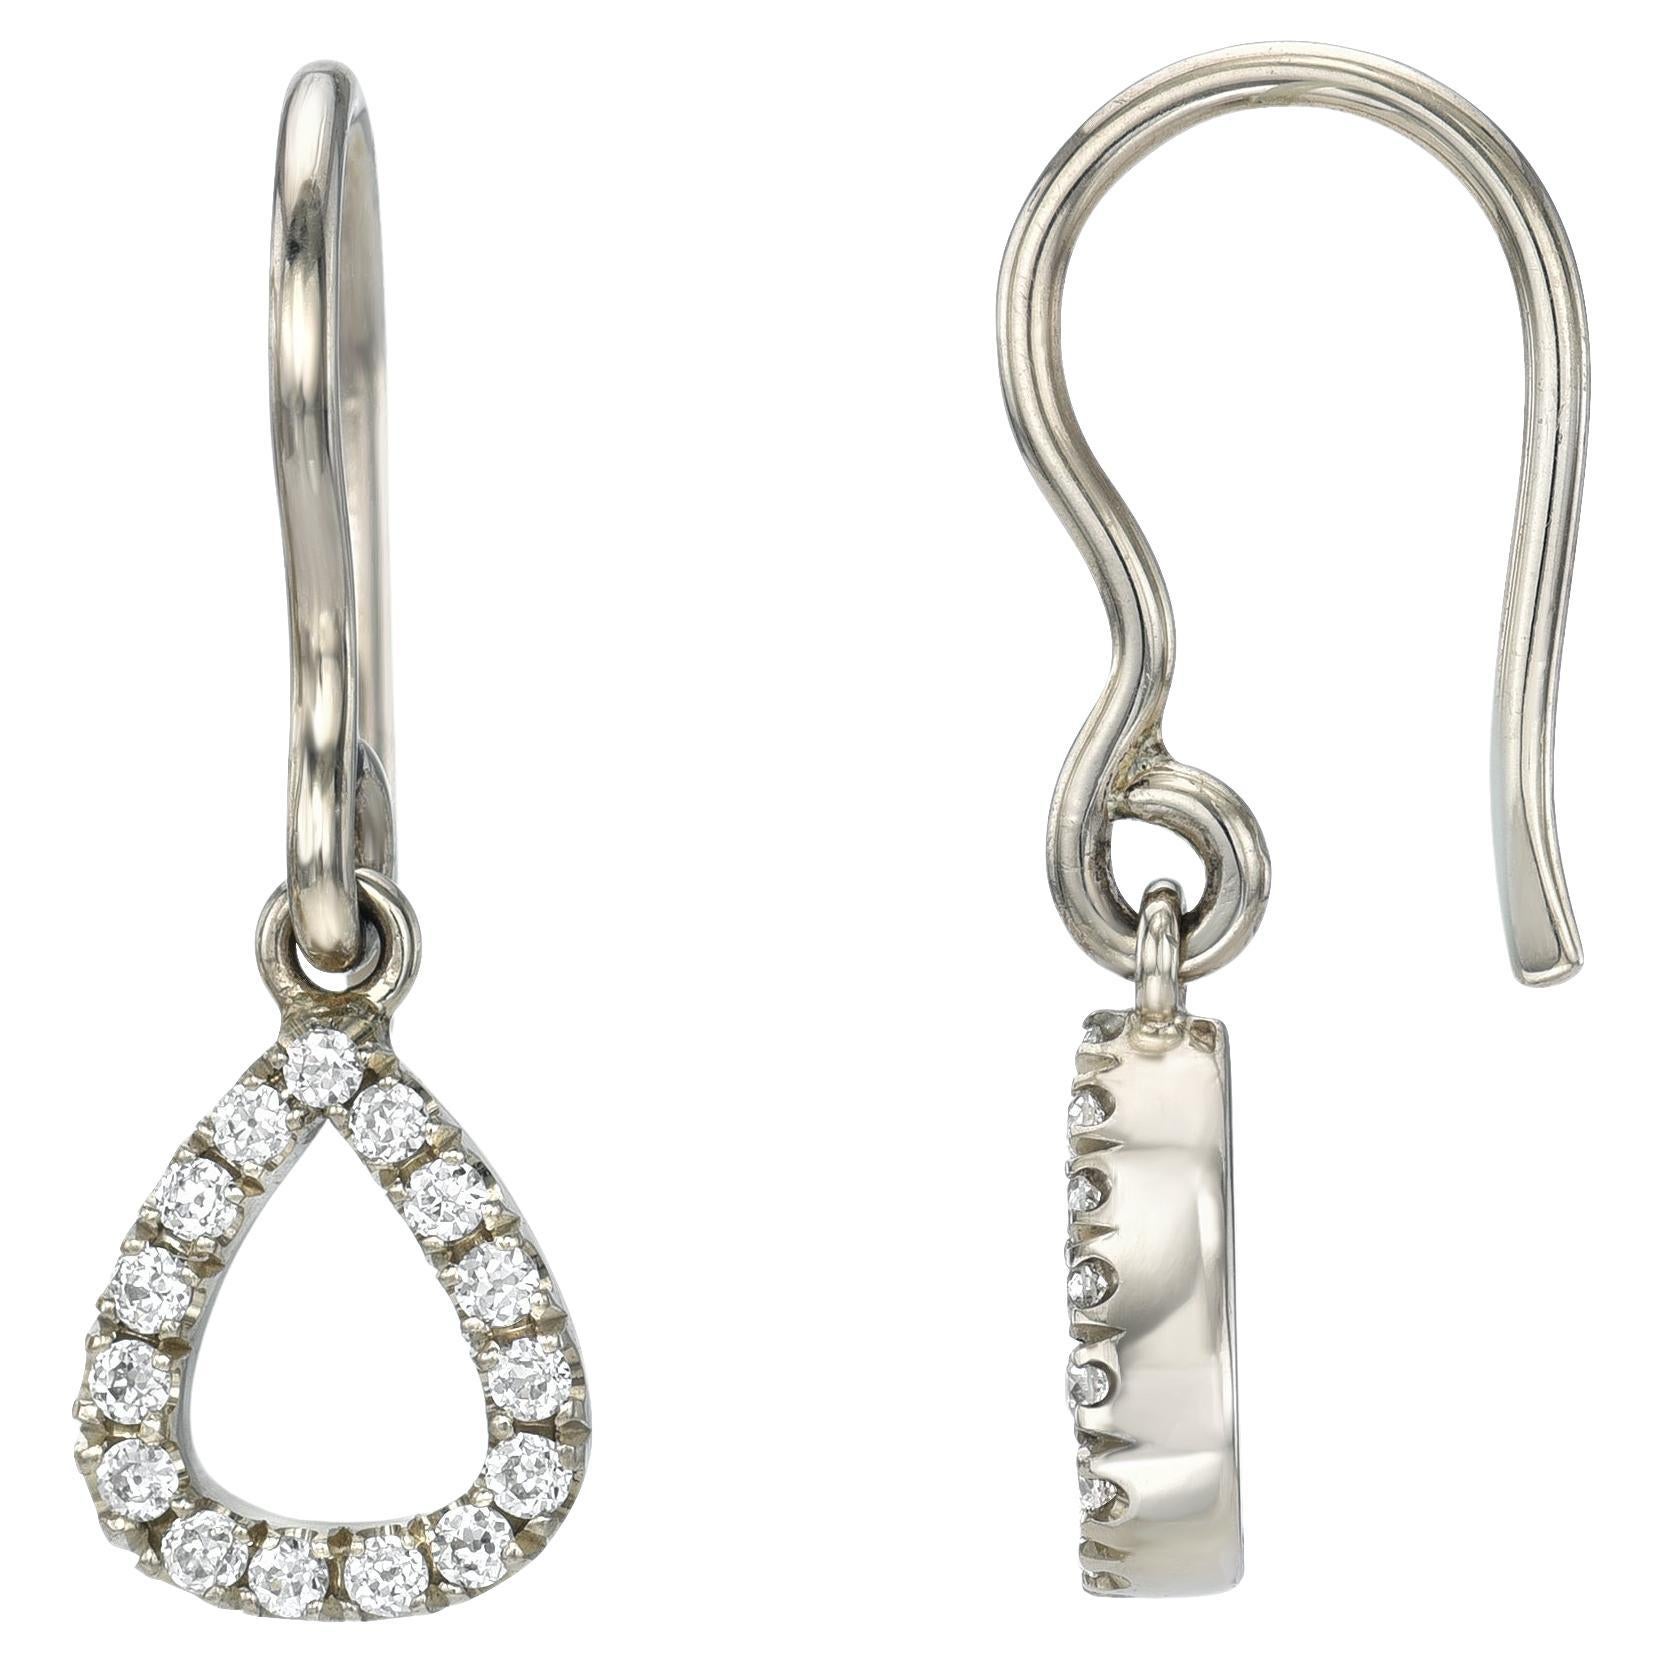 Handcrafted Keely Old European Cut Diamond Drop Earrings by Single Stone For Sale